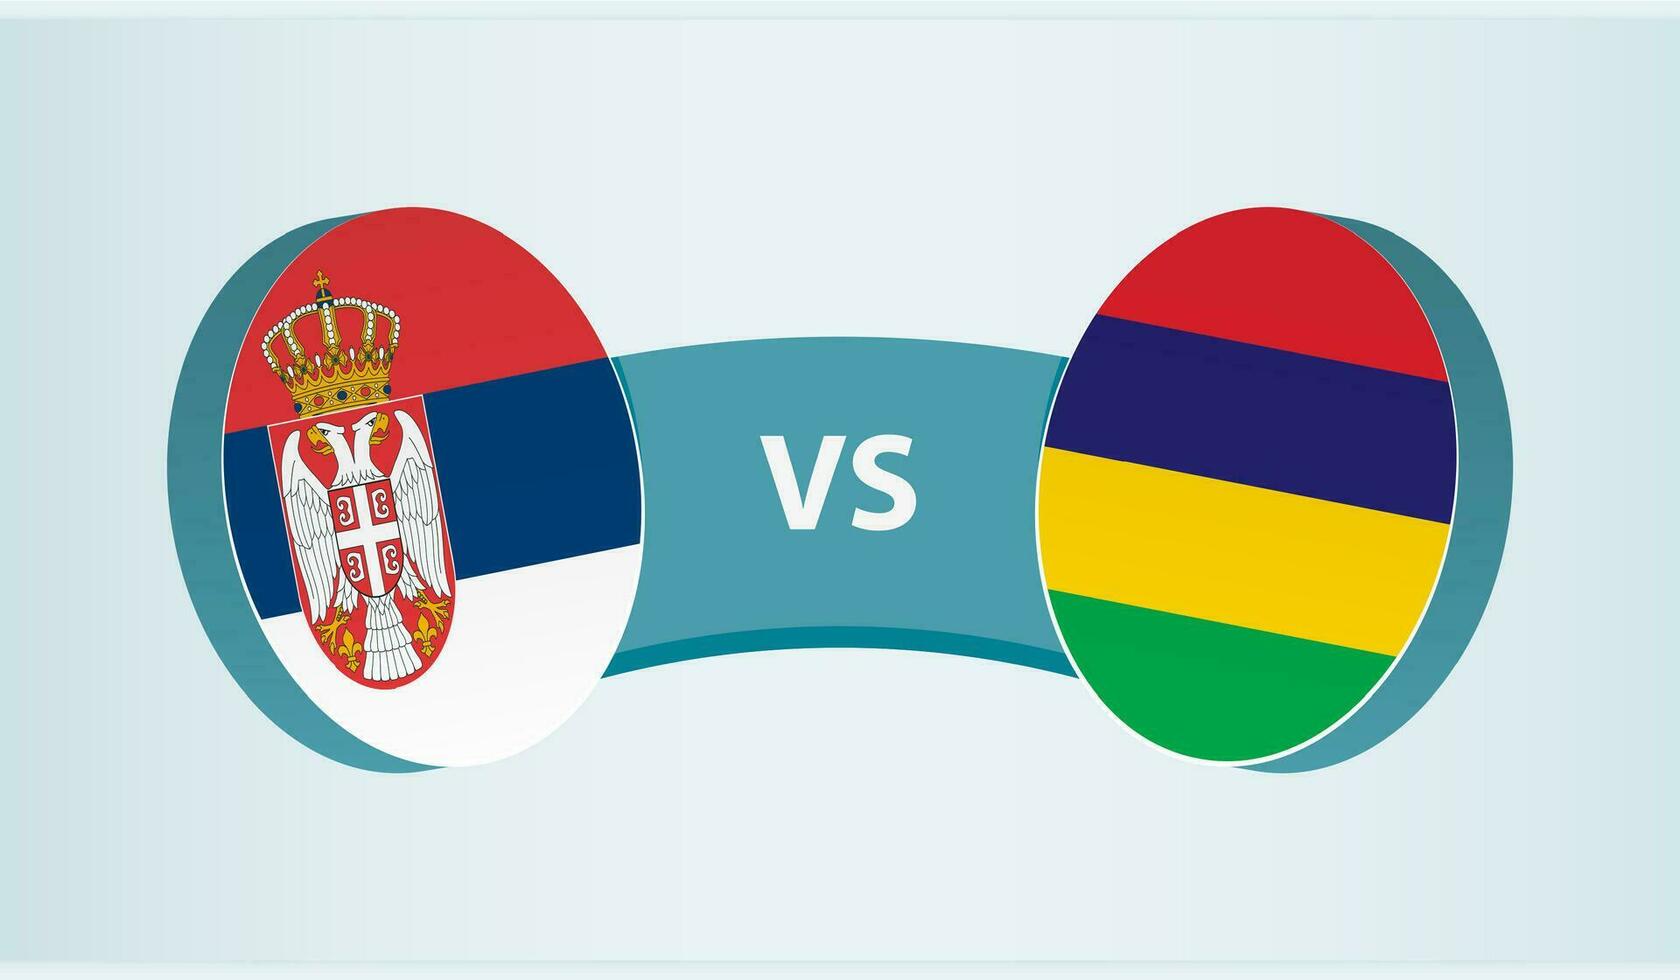 Servië versus mauritius, team sport- wedstrijd concept. vector